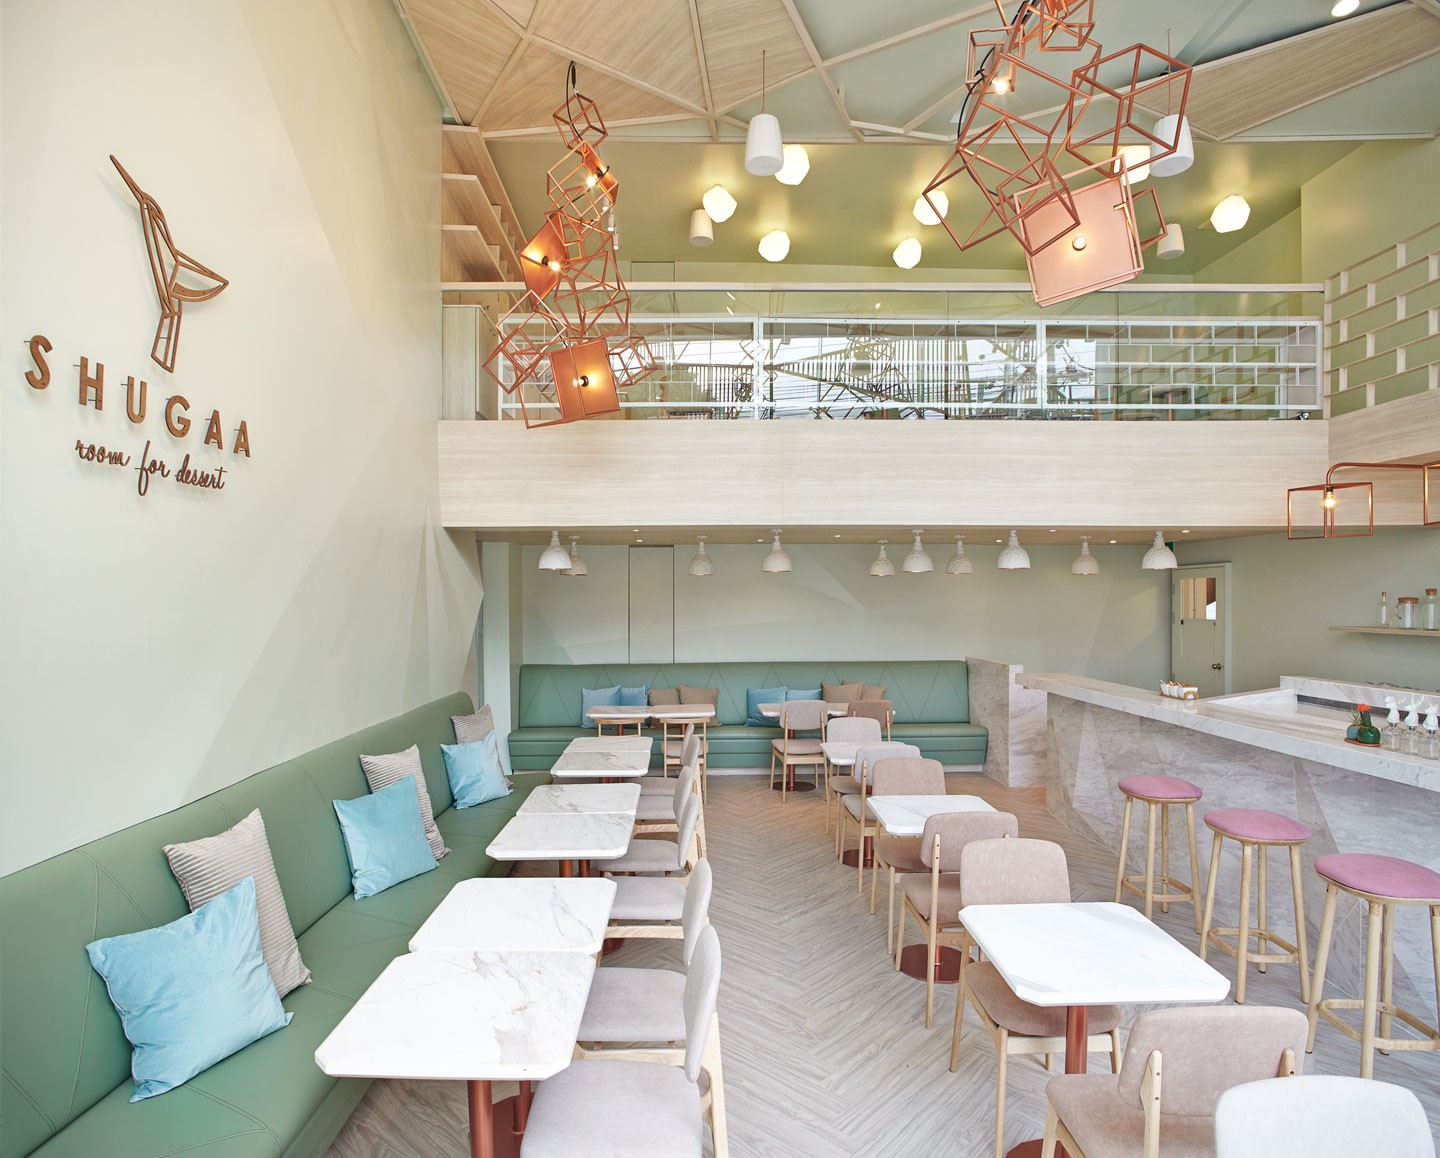 Shugaa dessert bar | interior design inspired by sugar crystals